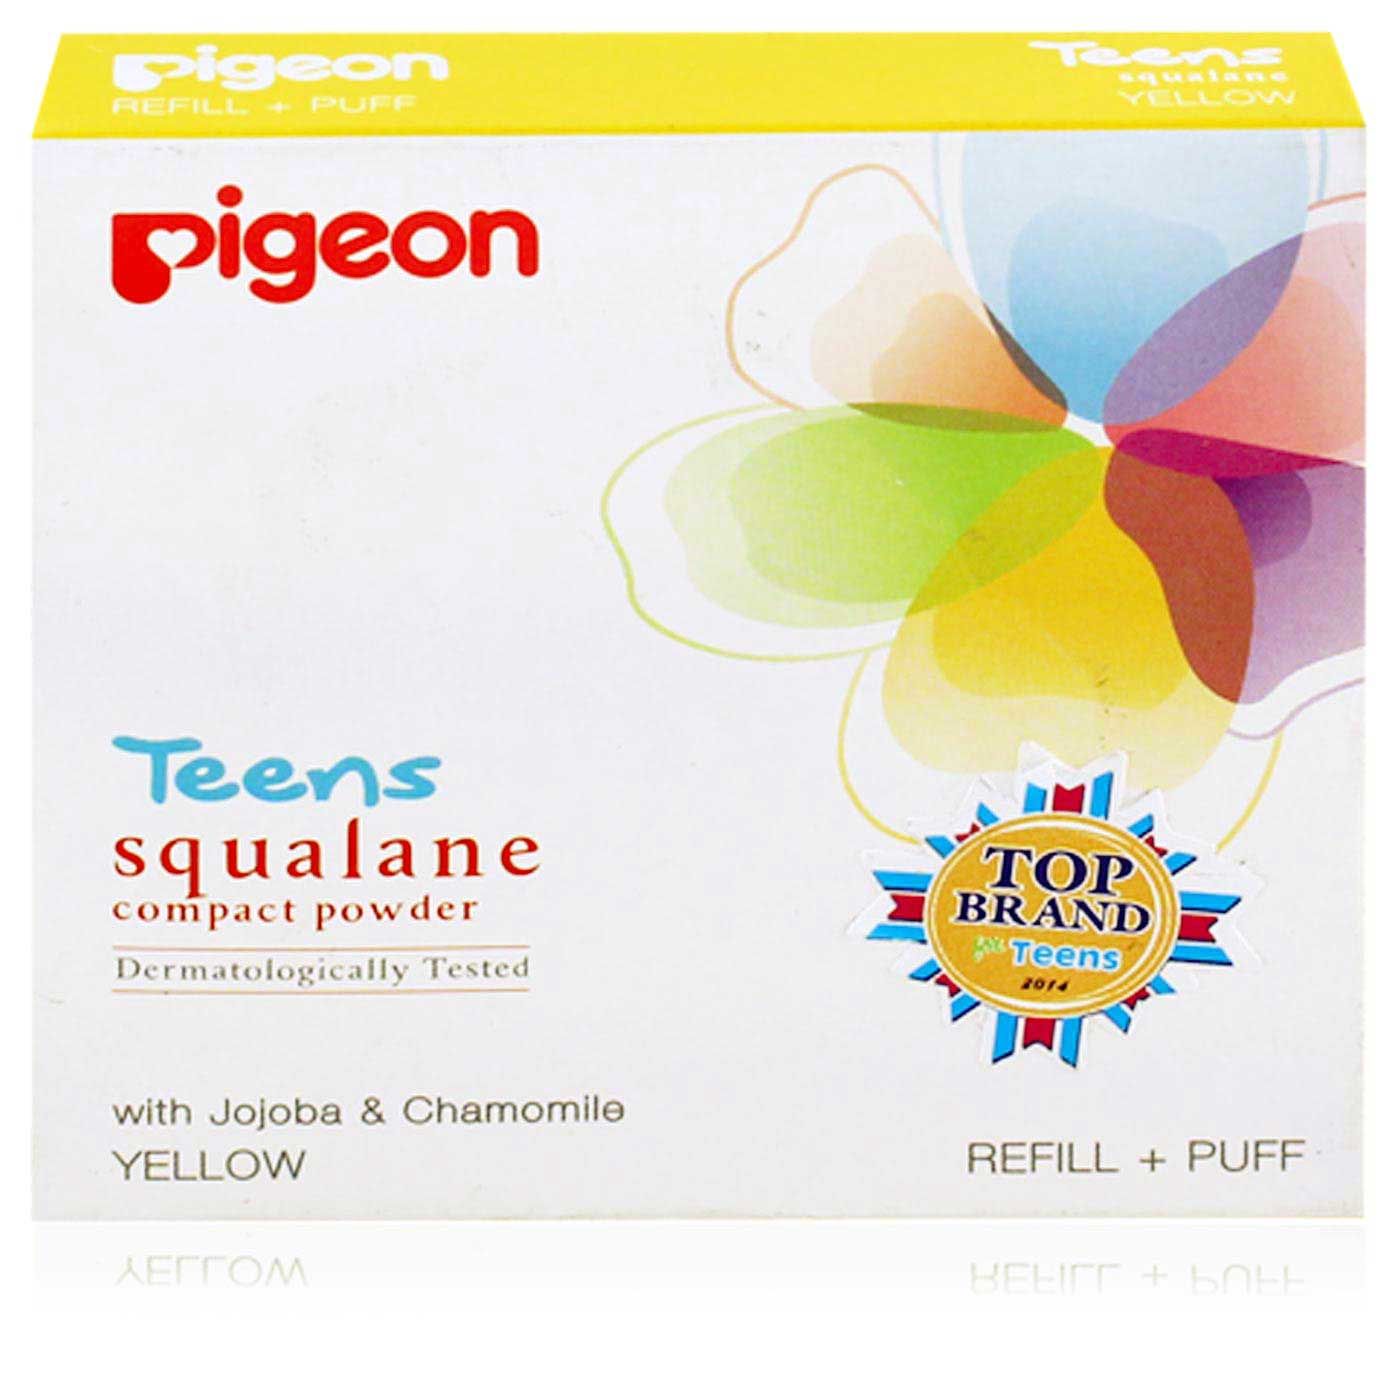 Pigeon Refill Compact Powder Squalane Yellow (14g) - 1